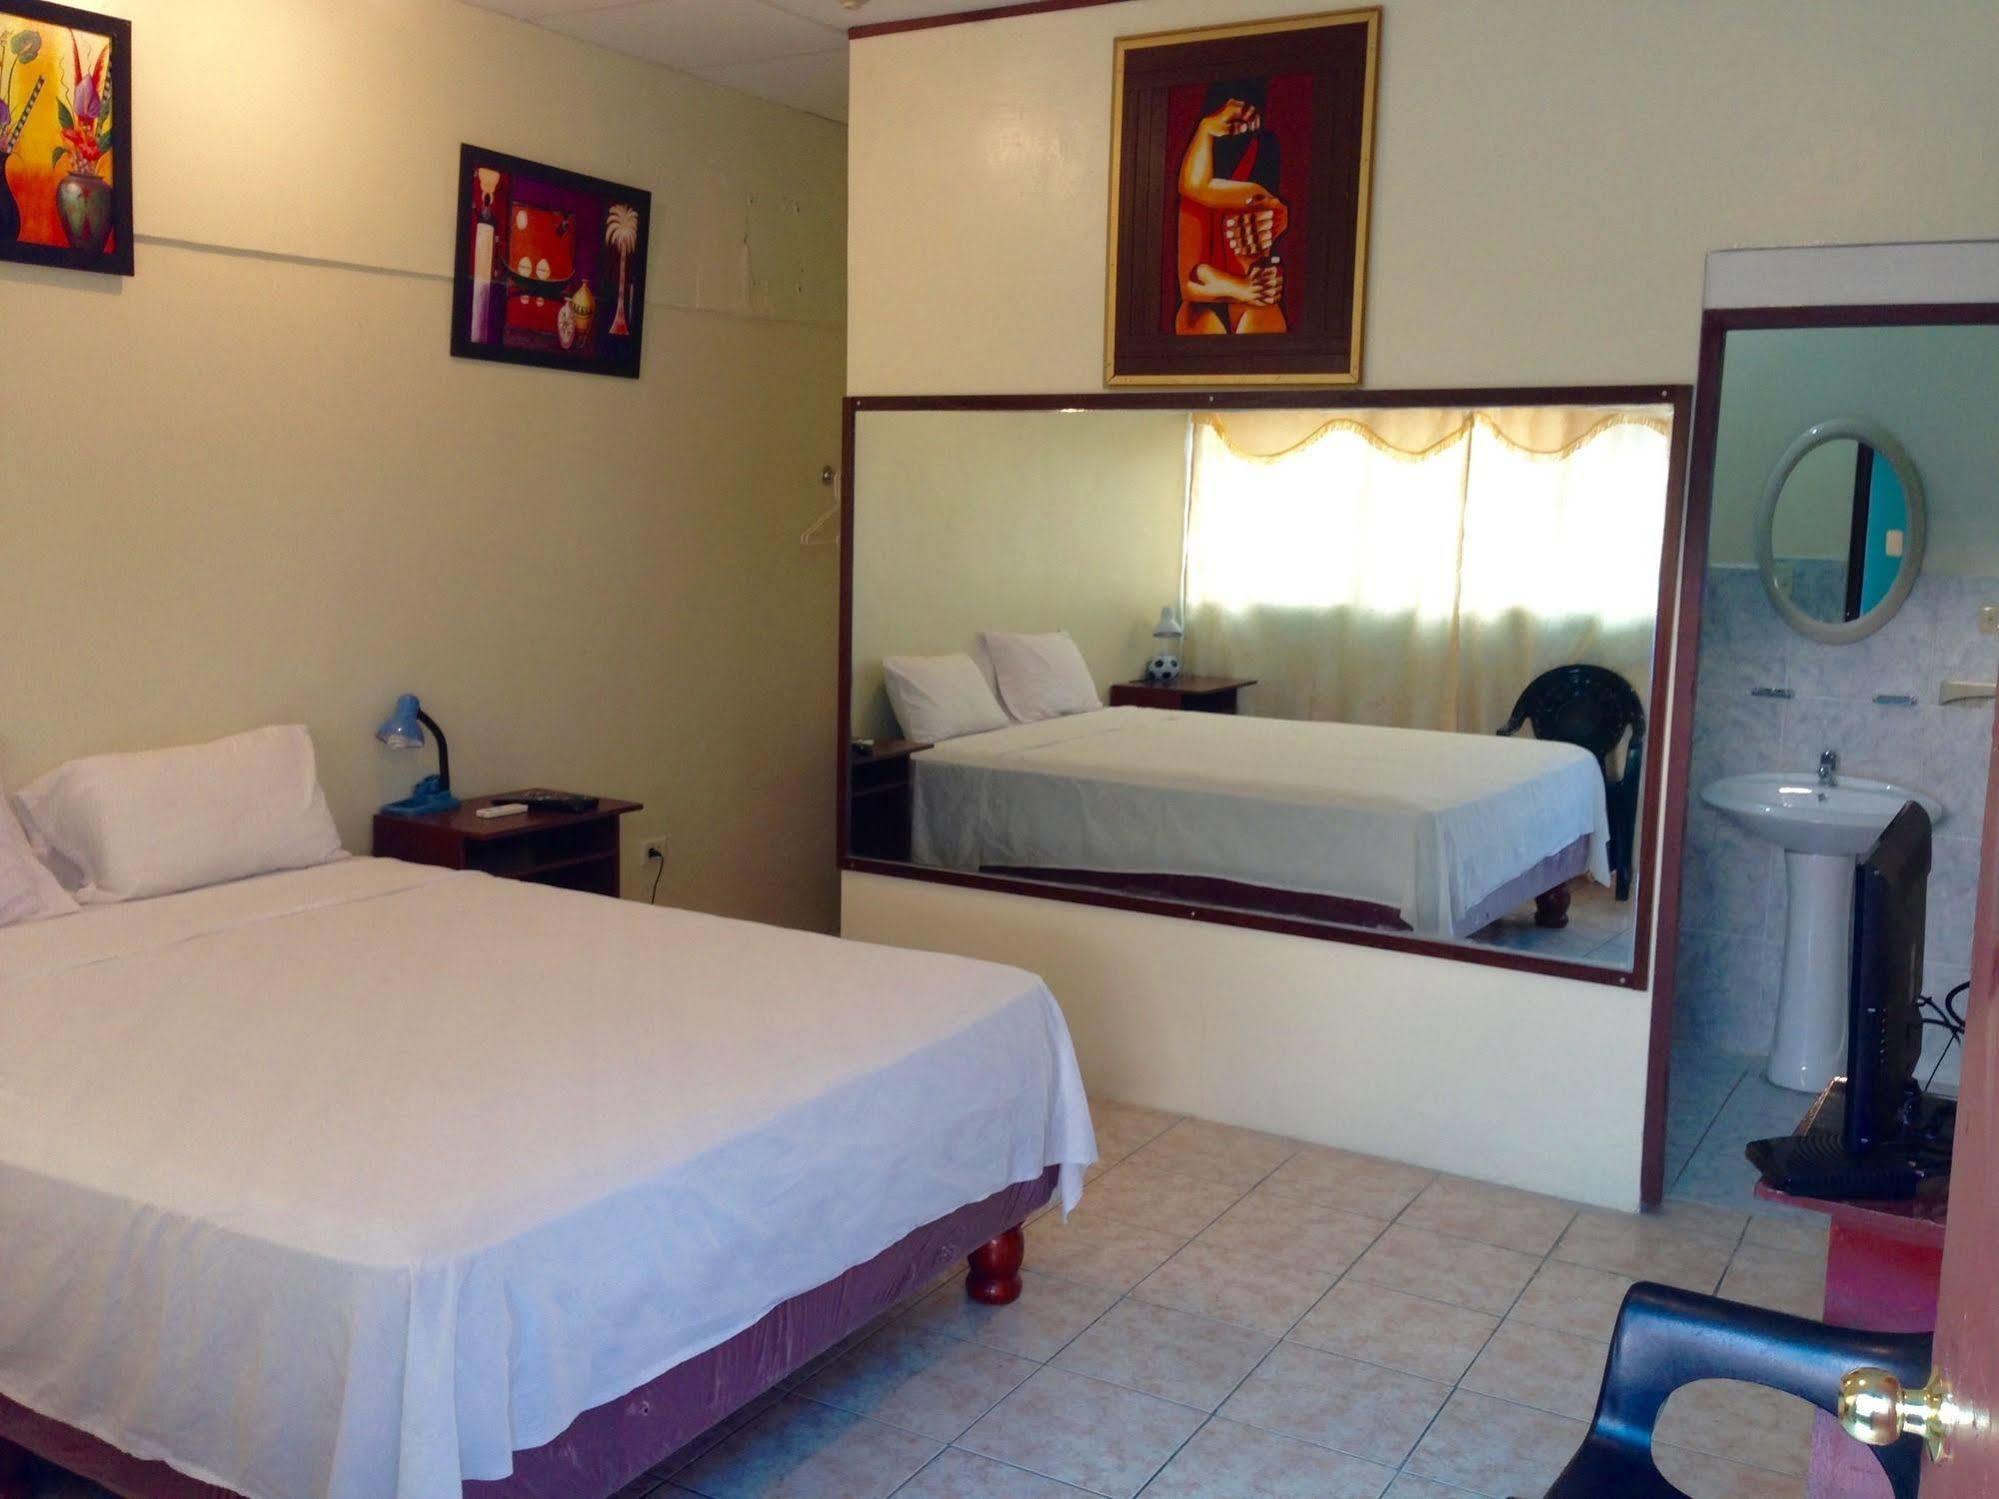 Hotel Mundialcity Guayaquil Buitenkant foto